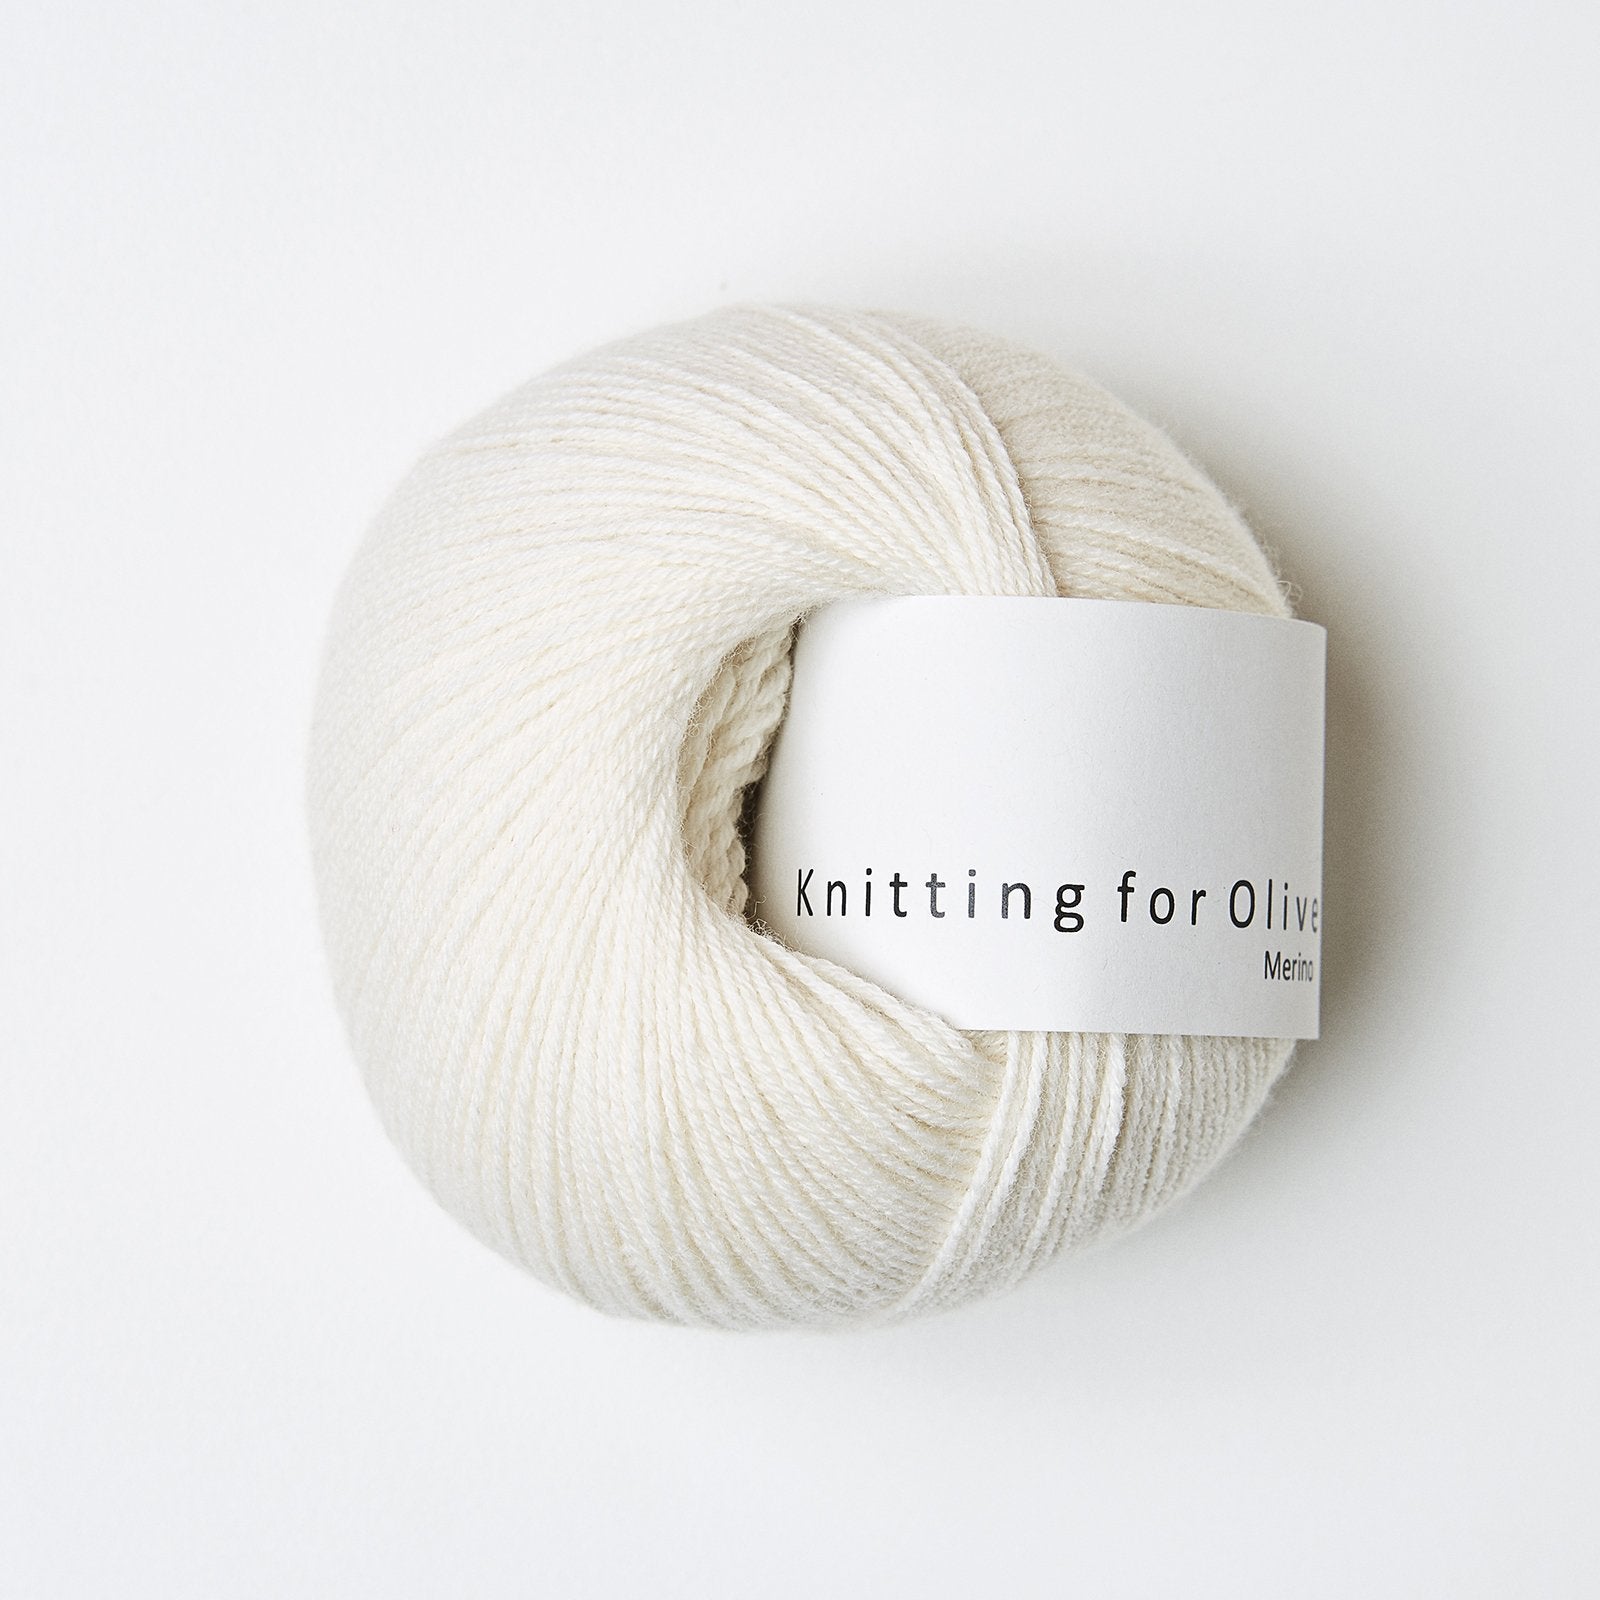 Merino - Knitting for Olive – La Maison Tricotée